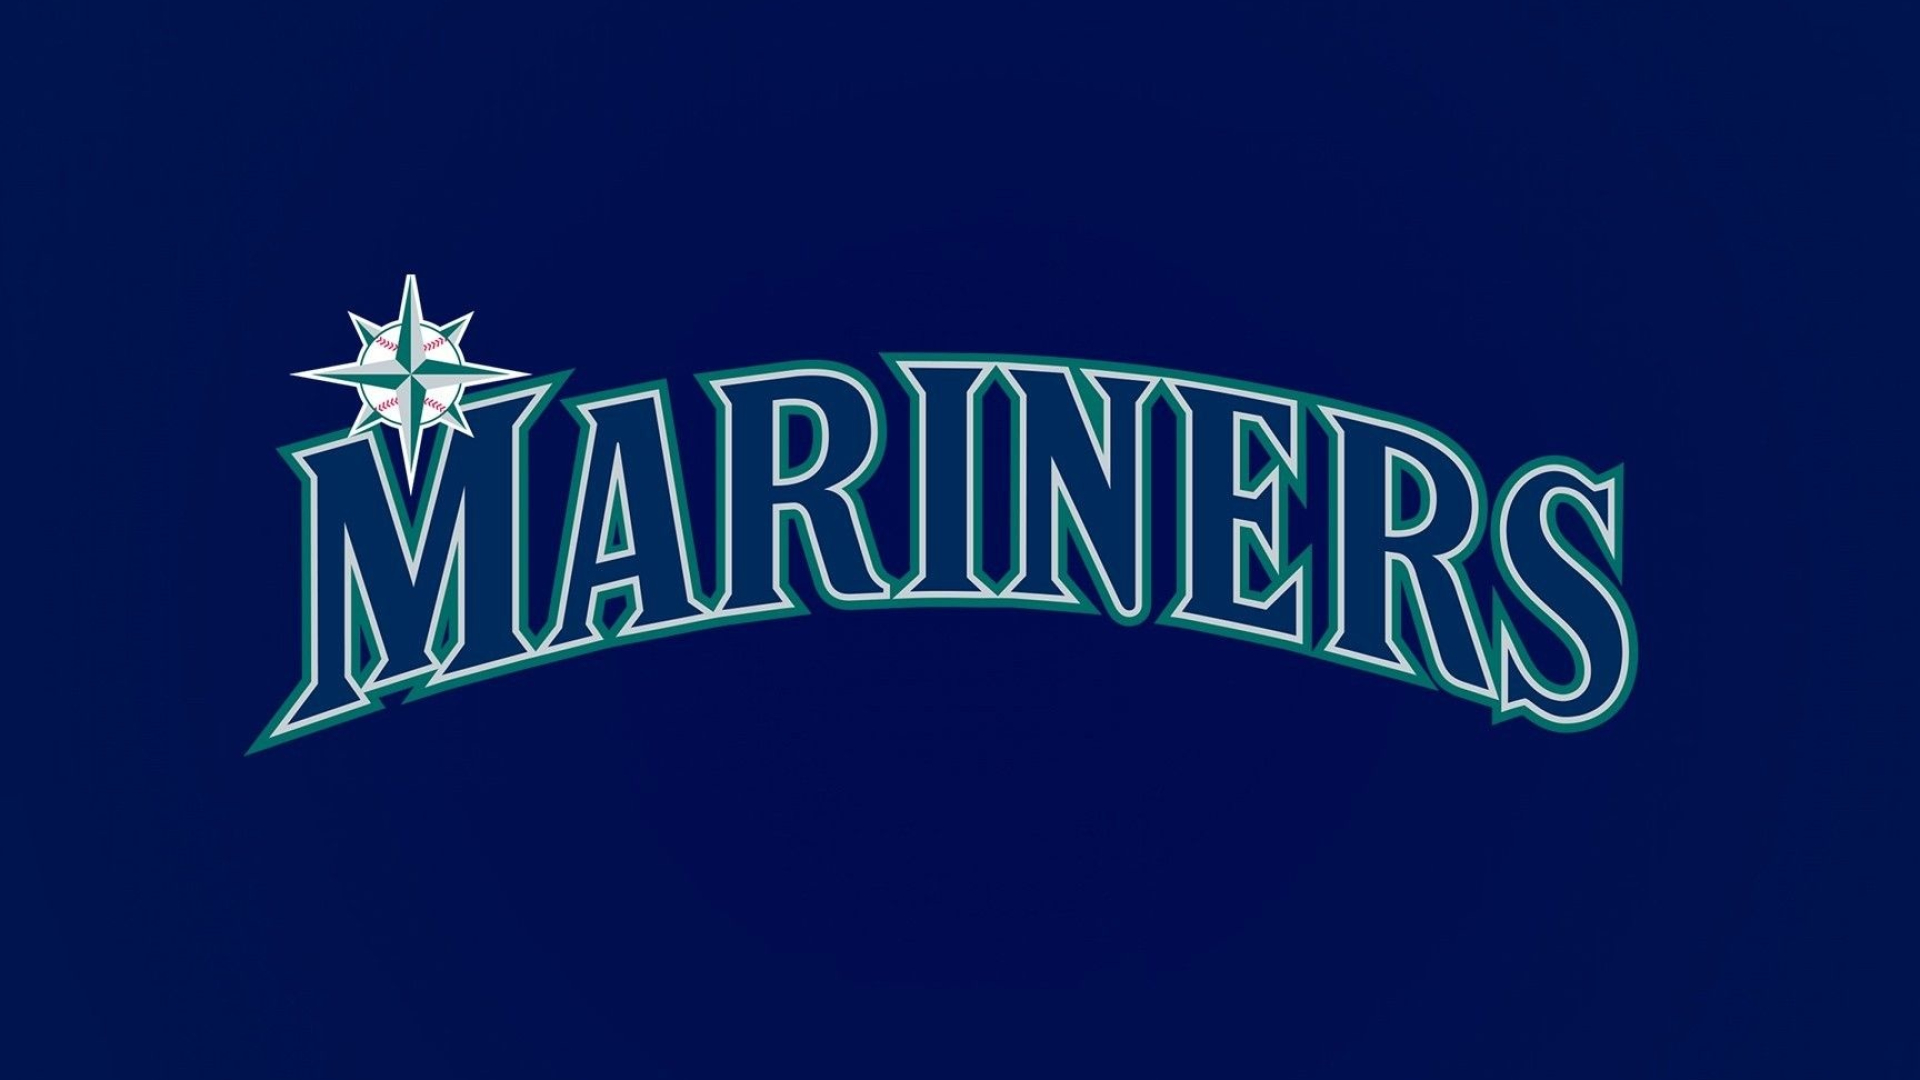 Seattle Mariners, Sports team, Wallpapers, Top free, 1920x1080 Full HD Desktop